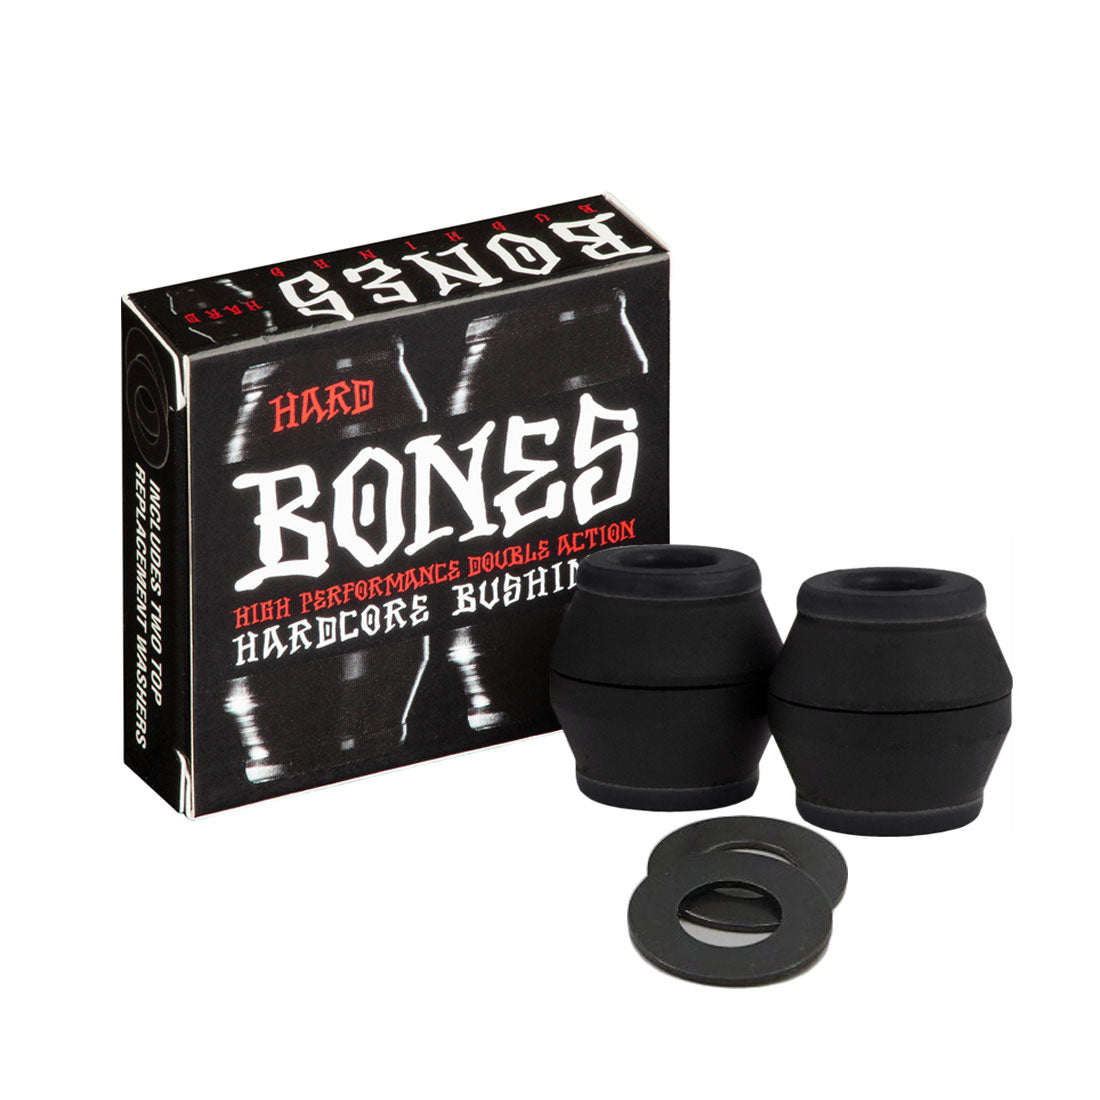 Bones Hardcore Conical Bushings 4pk - Black Black Hard | 96A Skateboard Hardware and Parts